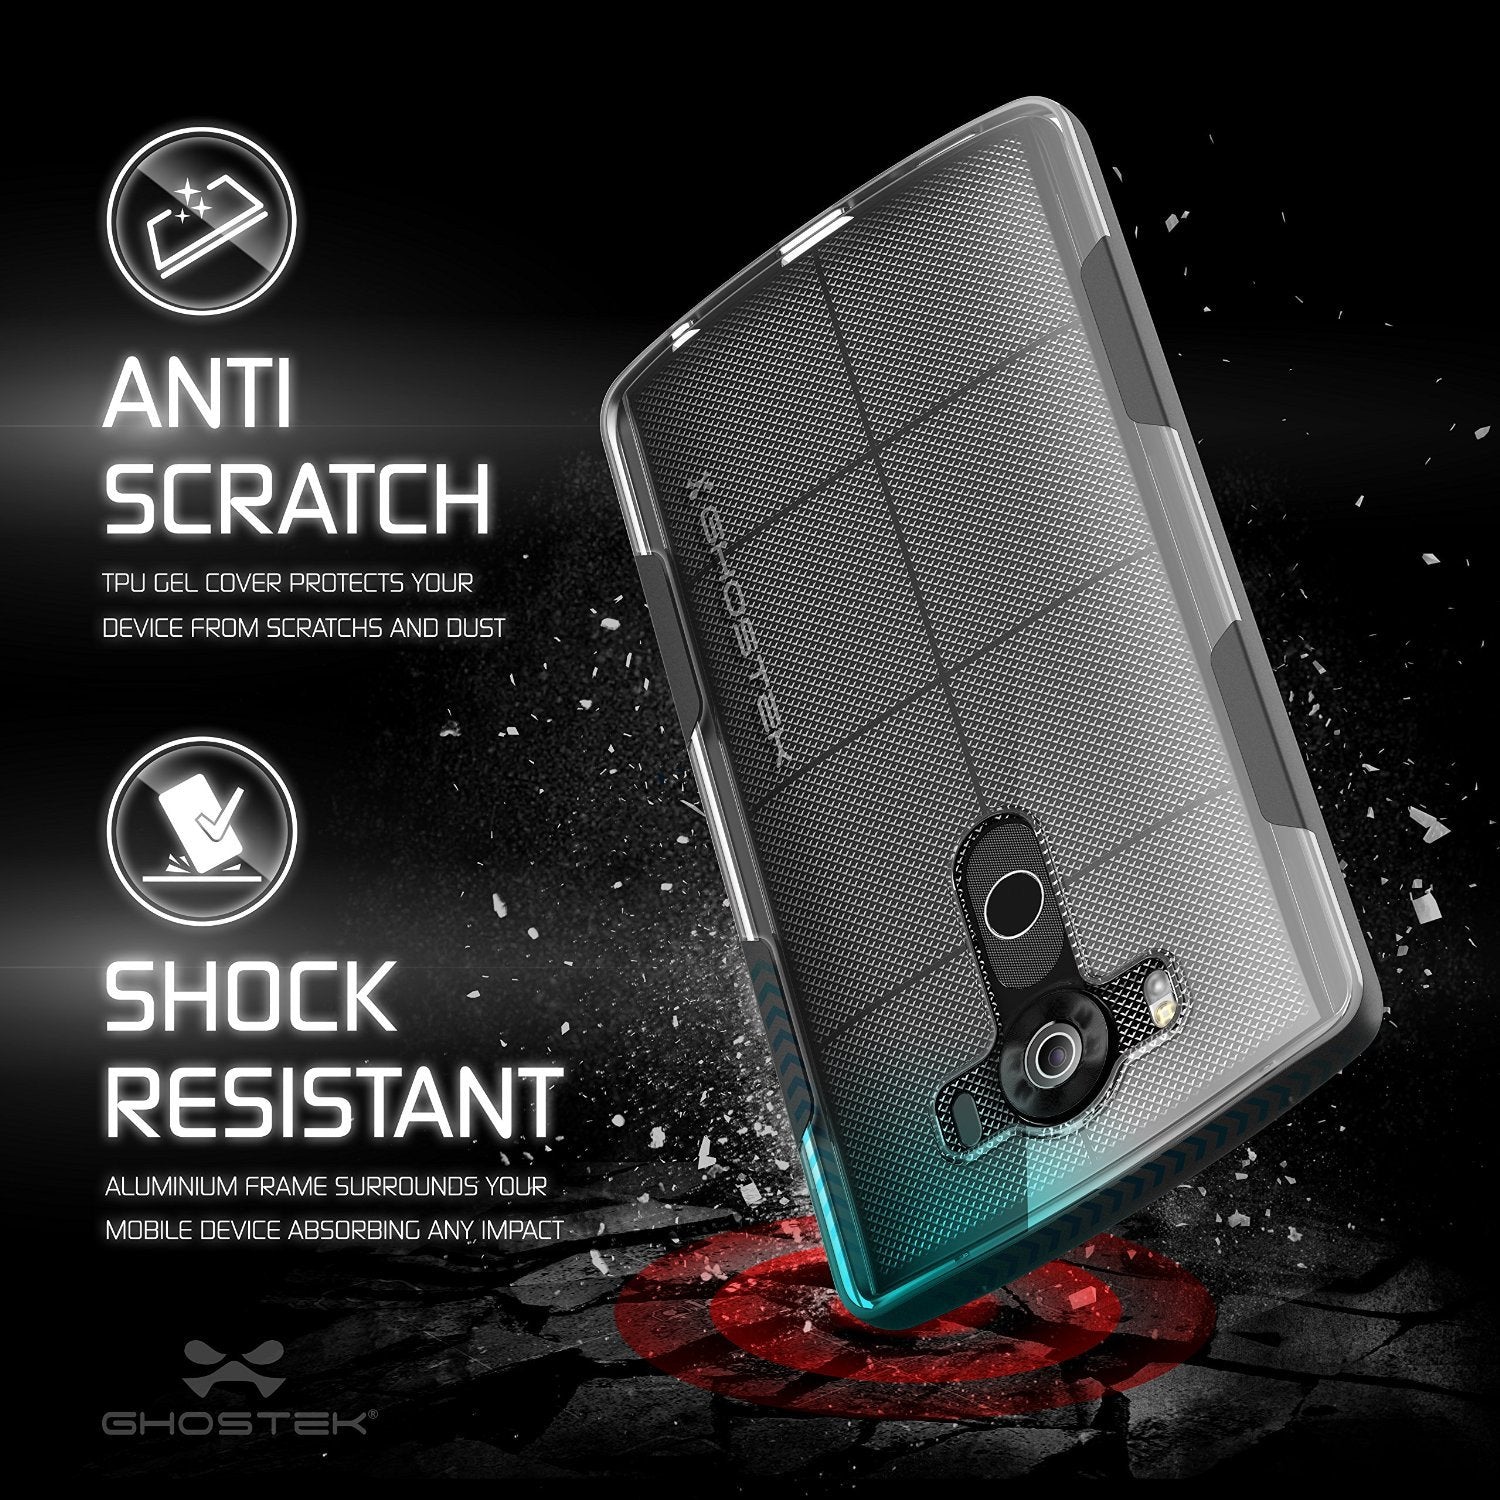 LG V10 Case, Ghostek® Cloak Black Slim Hybrid Impact Armor Cover | Lifetime Warranty Exchange - PunkCase NZ